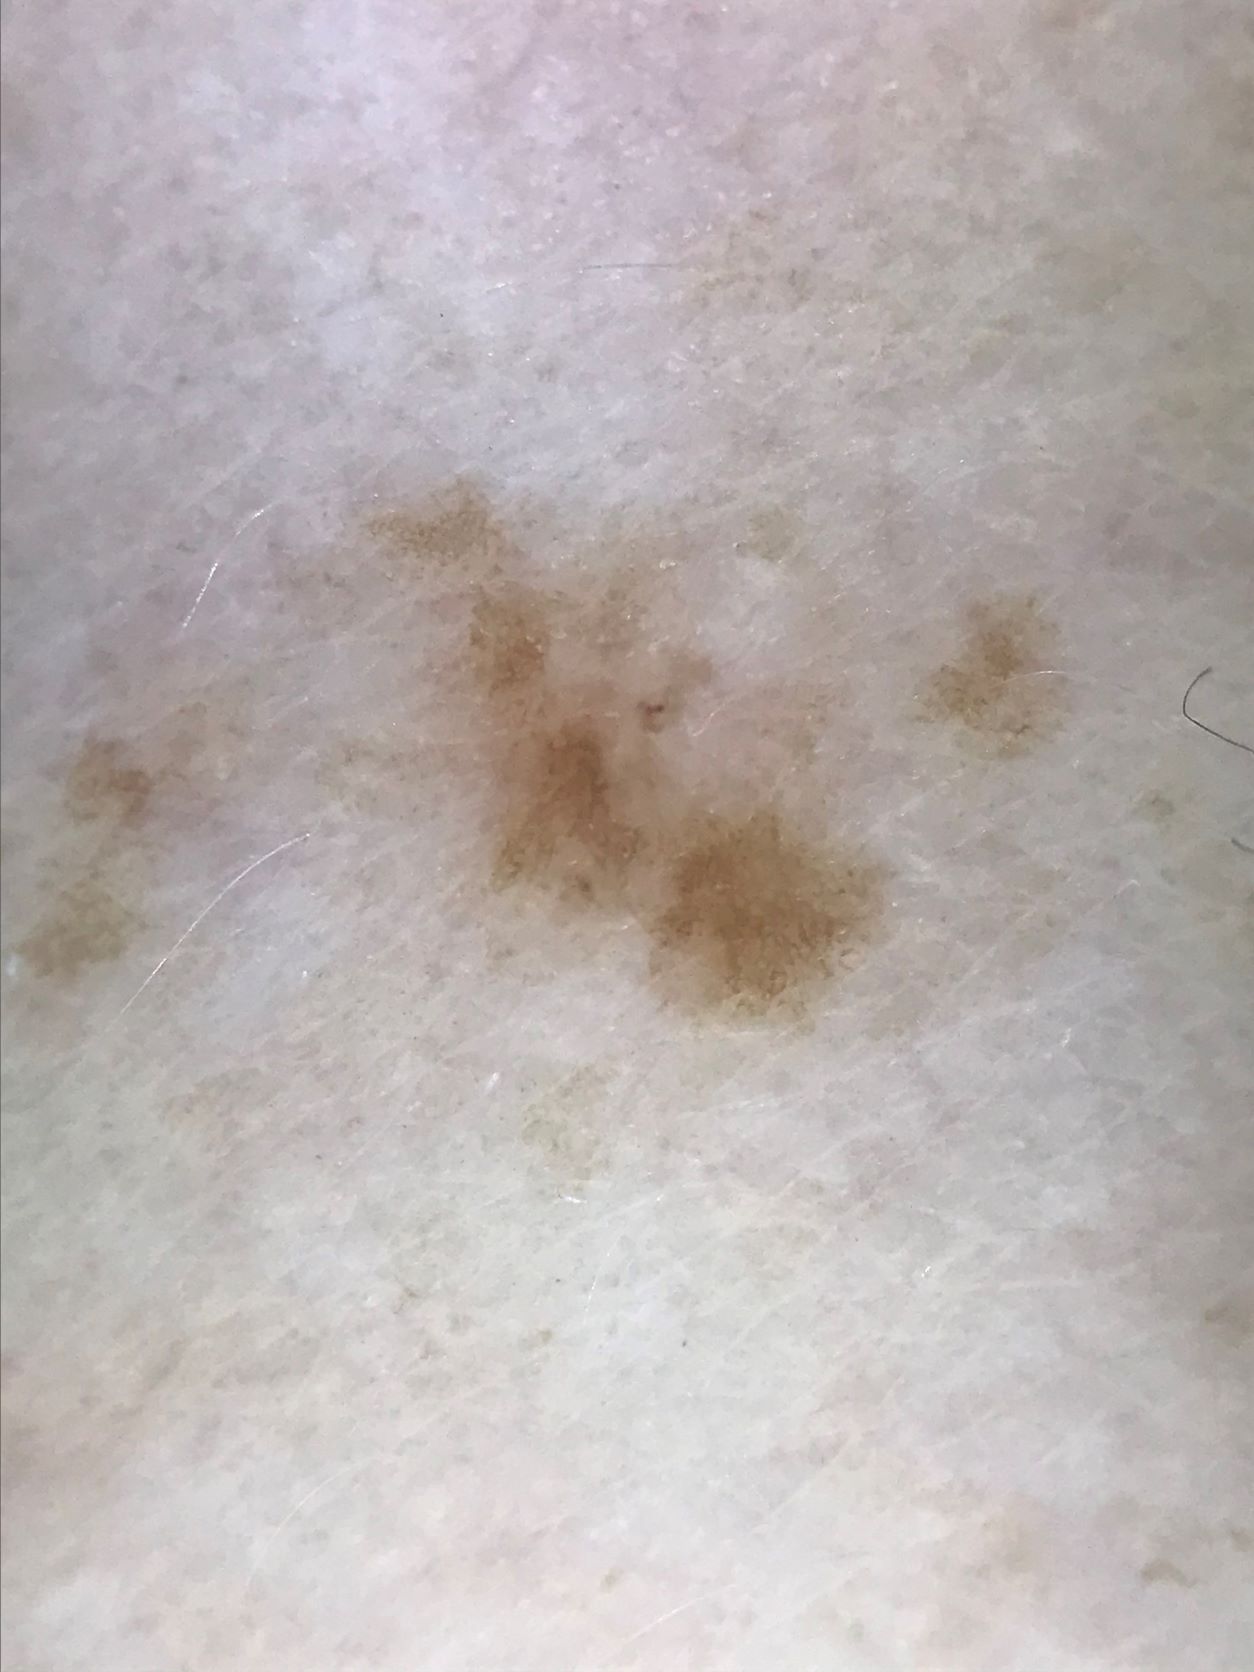 Mole and depigmentation